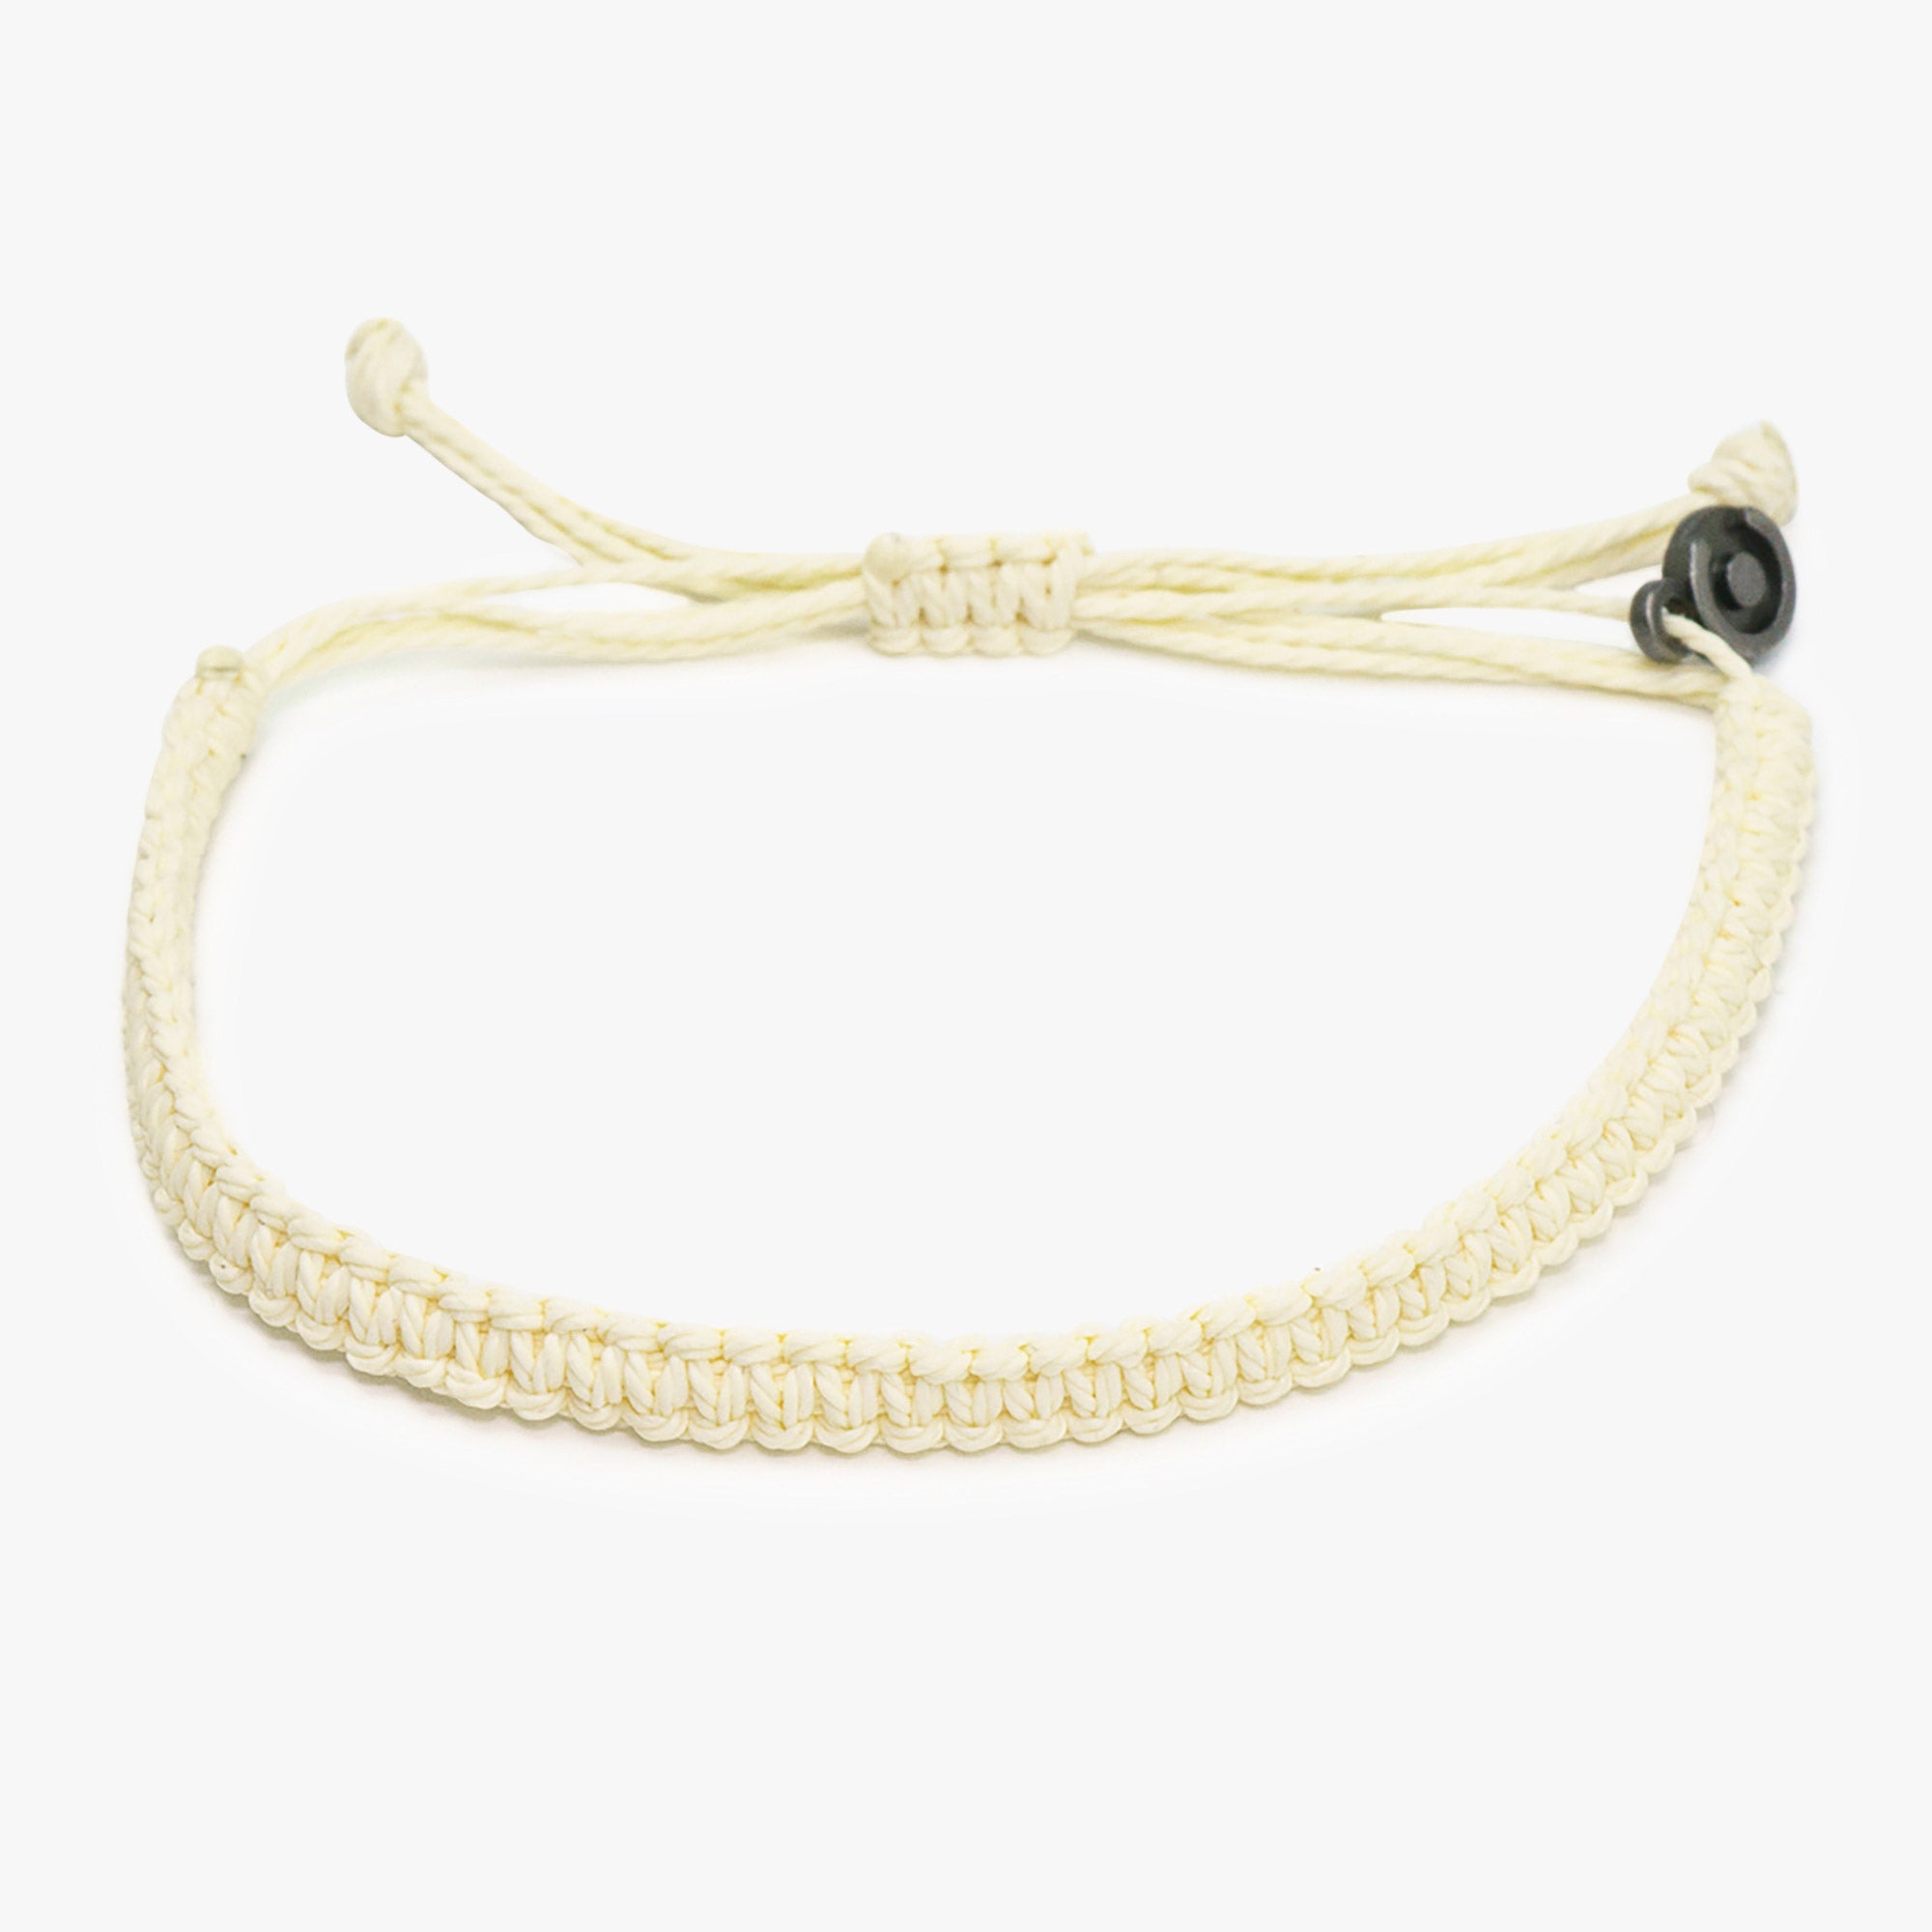 Off-white Cobra bracelet